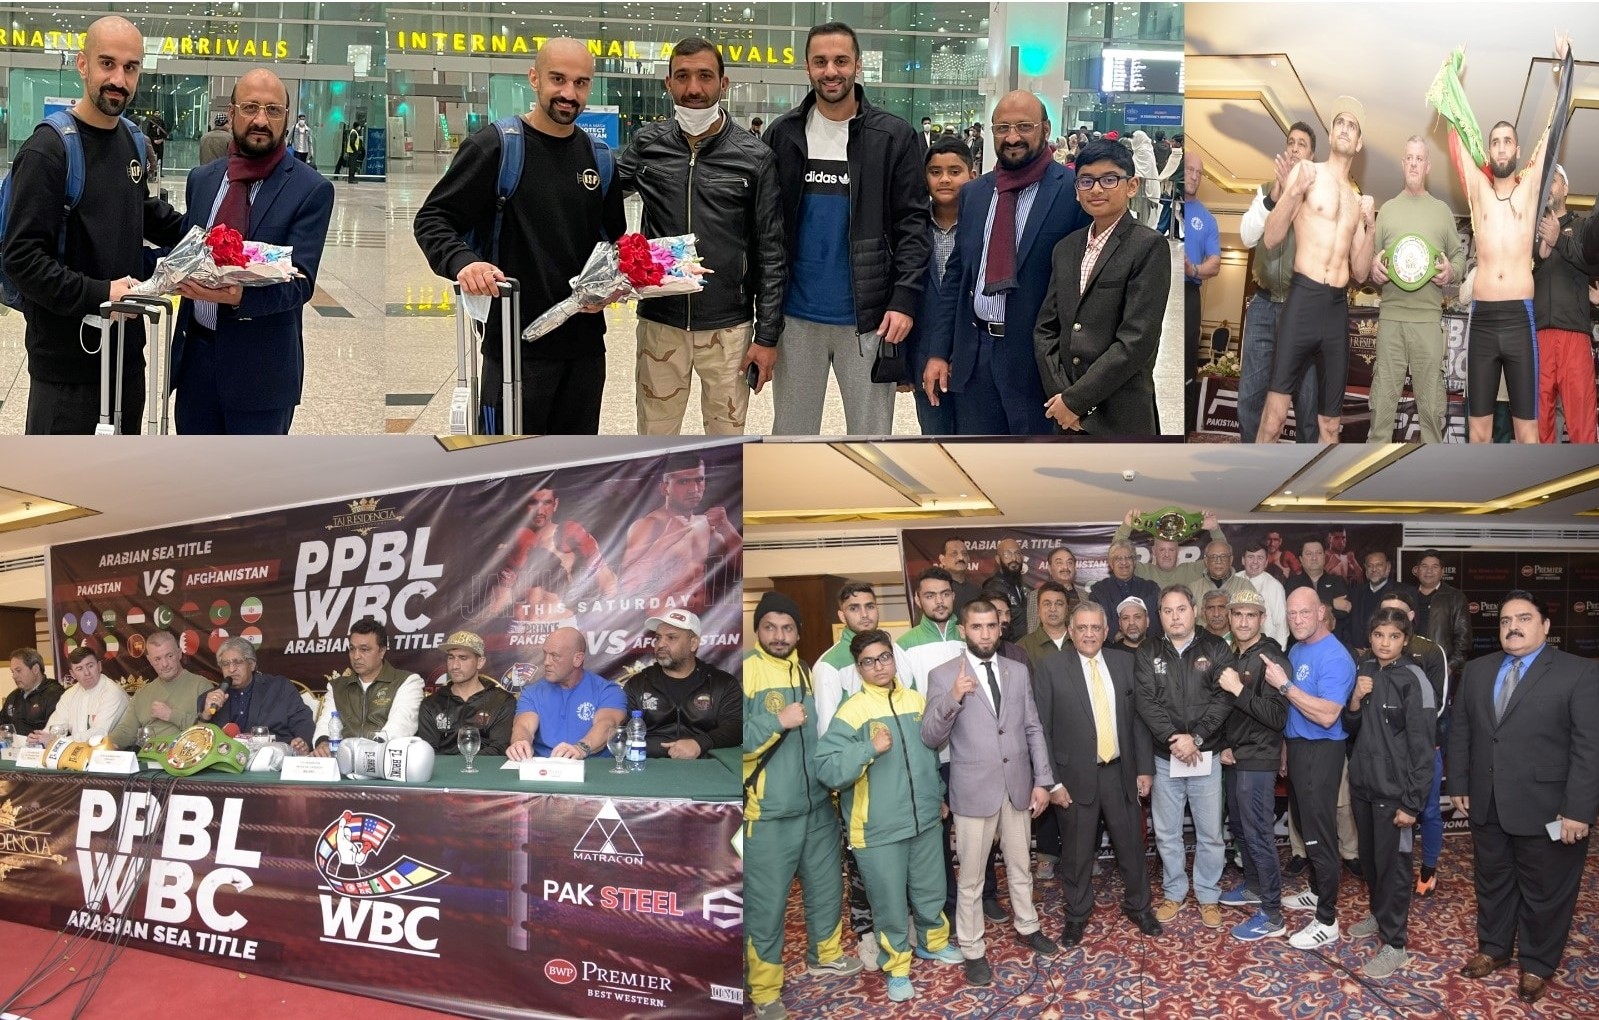 http://pakistanisinkuwait.com/images/kuwait-boxer-arrived-pakistan.jpg